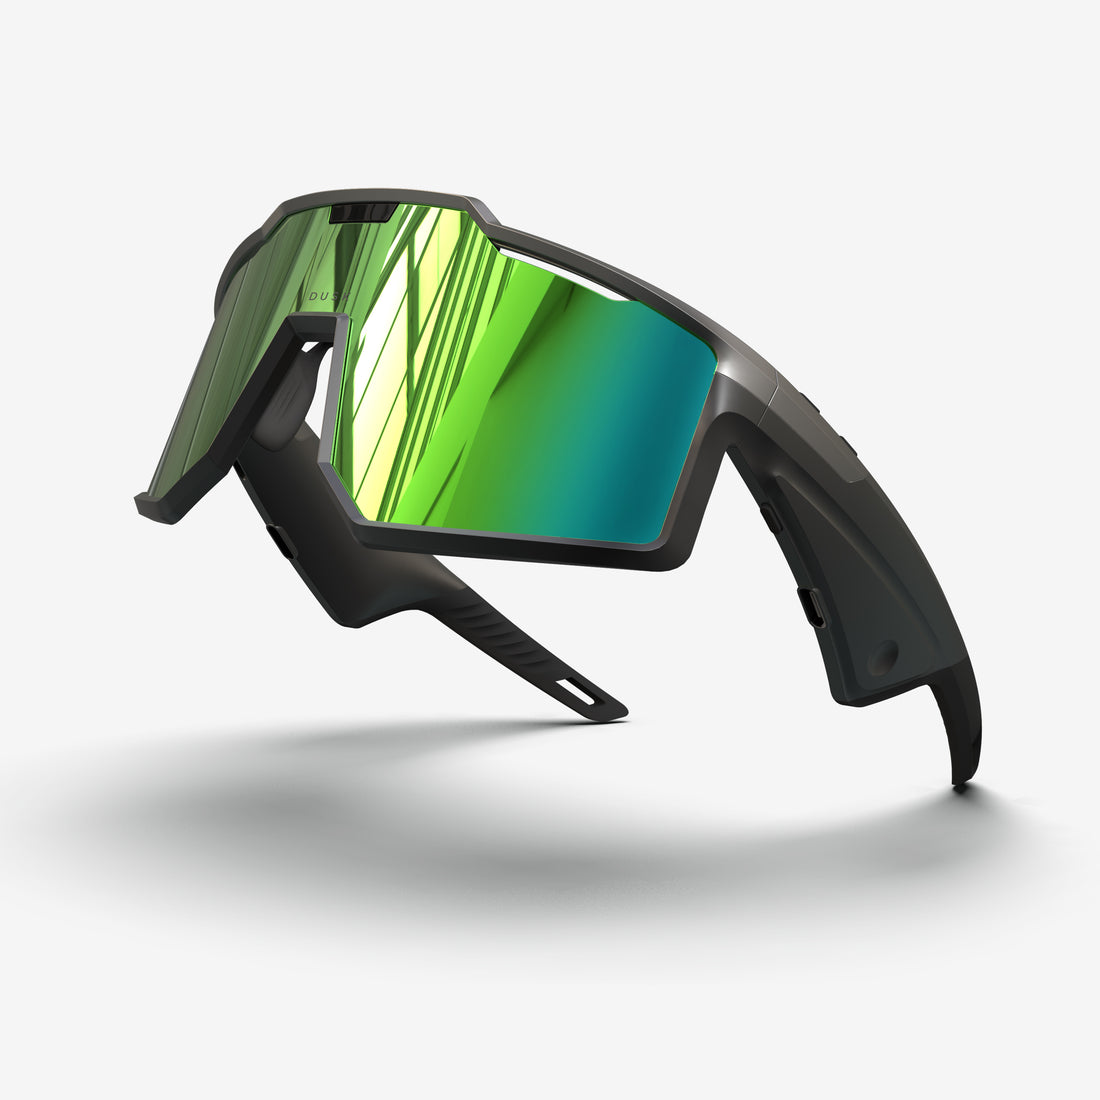 Dusk Sport — the world's first electrochromic sports sunglasses